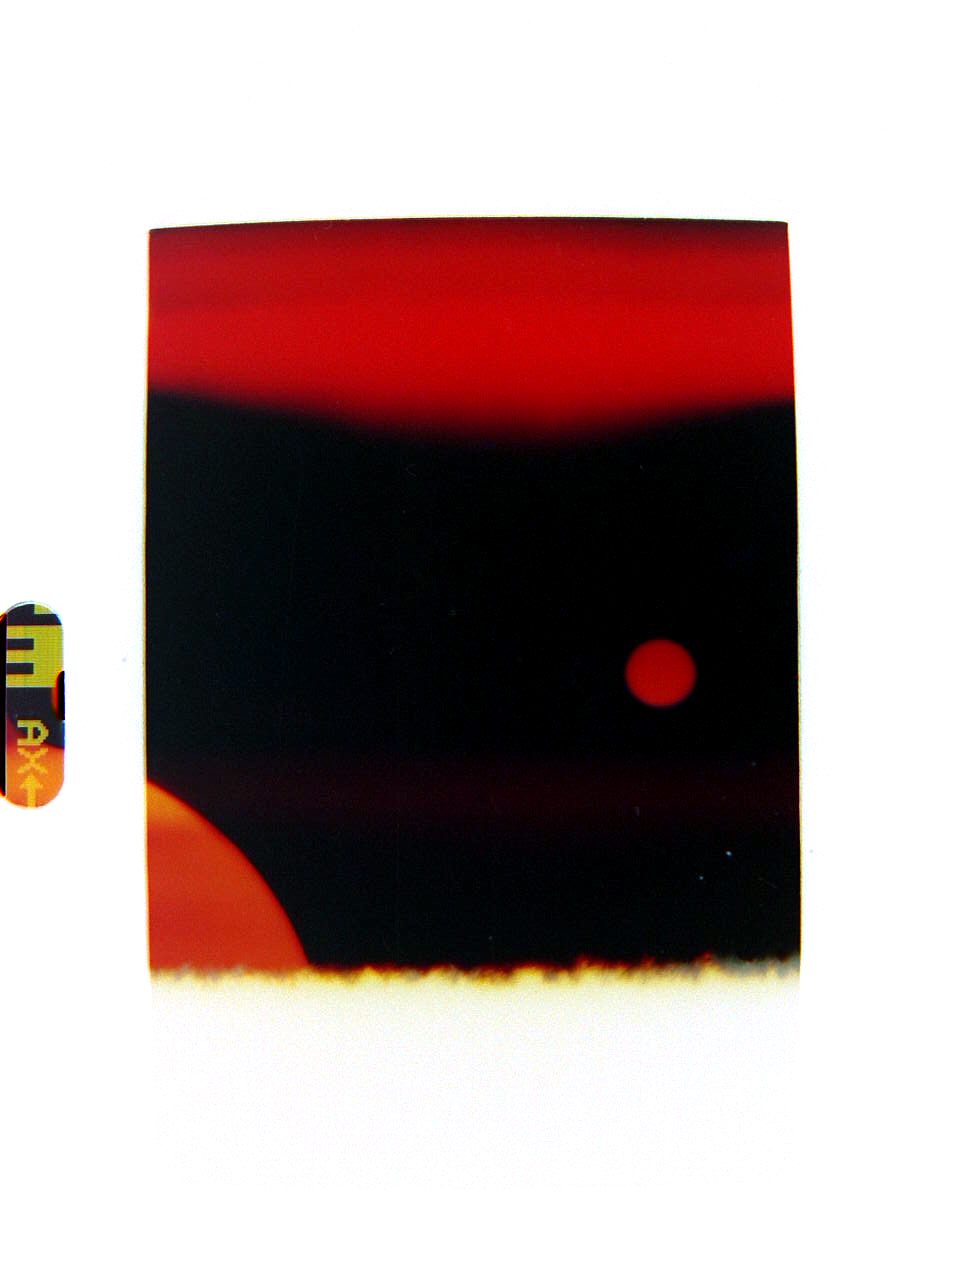 maartent film scan strip dark black red square